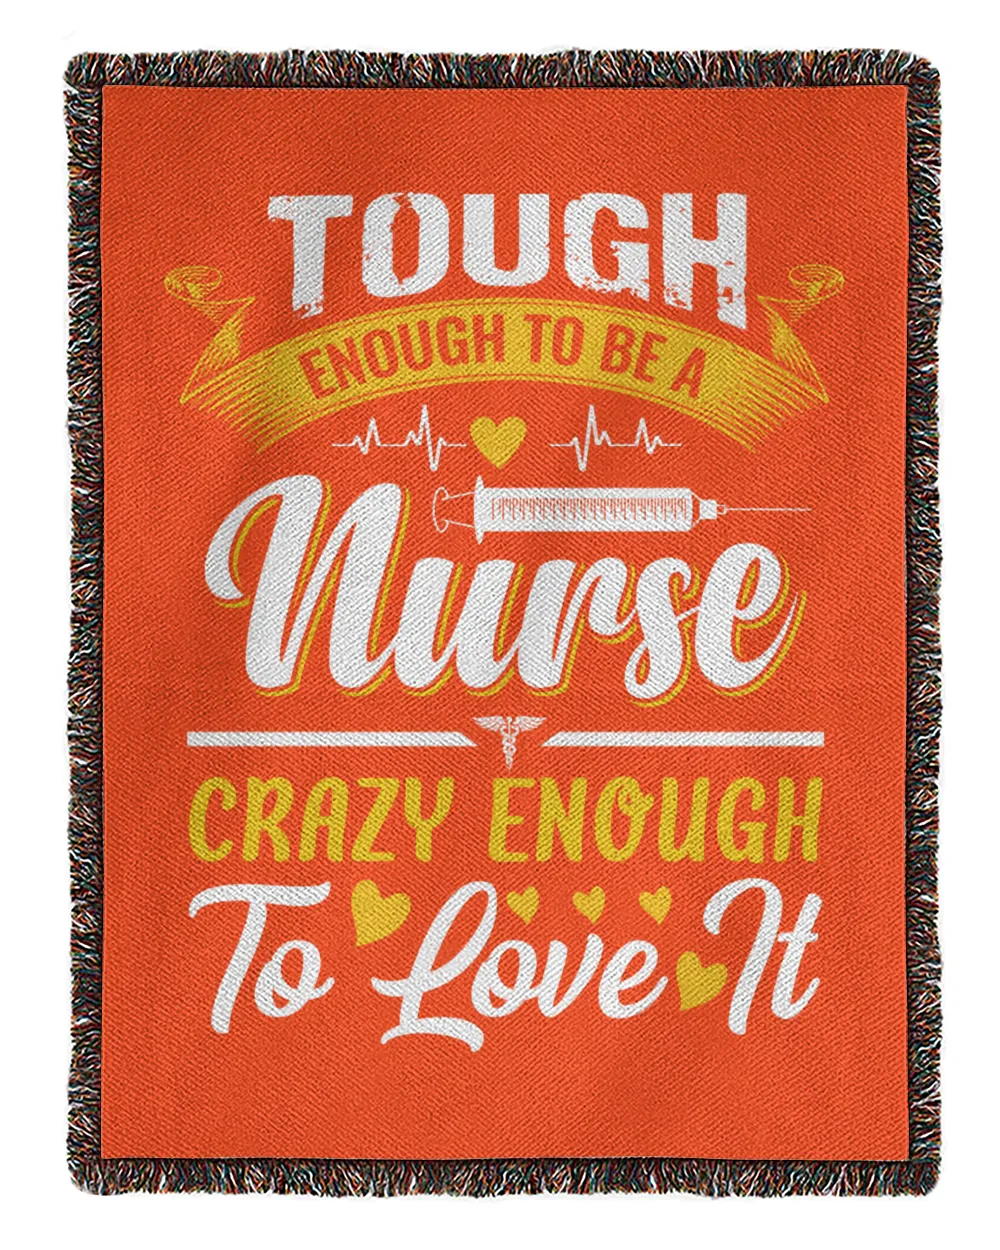 Tough Enough To be Nurse Crazy Enough To Love It Nurse